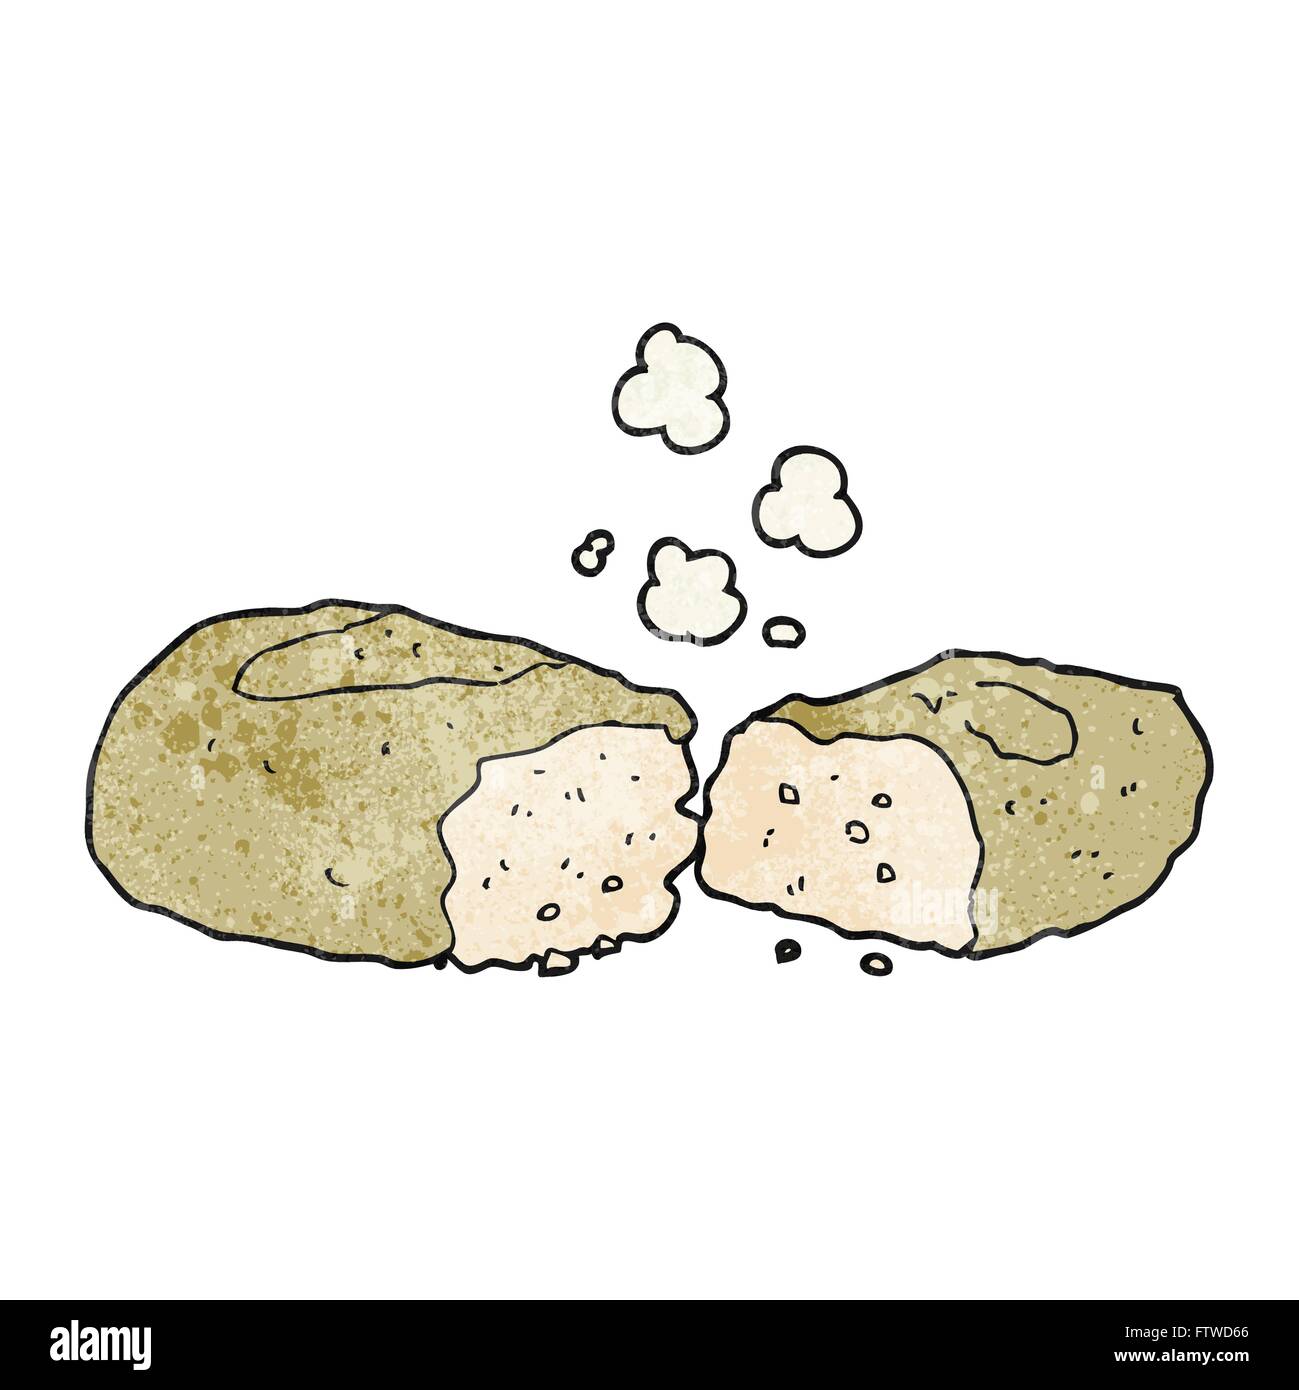 Крошки com. Крошки хлеба. Крошка от хлеба. Хлебушек крошки. Иллюстрация хлебные крошки.